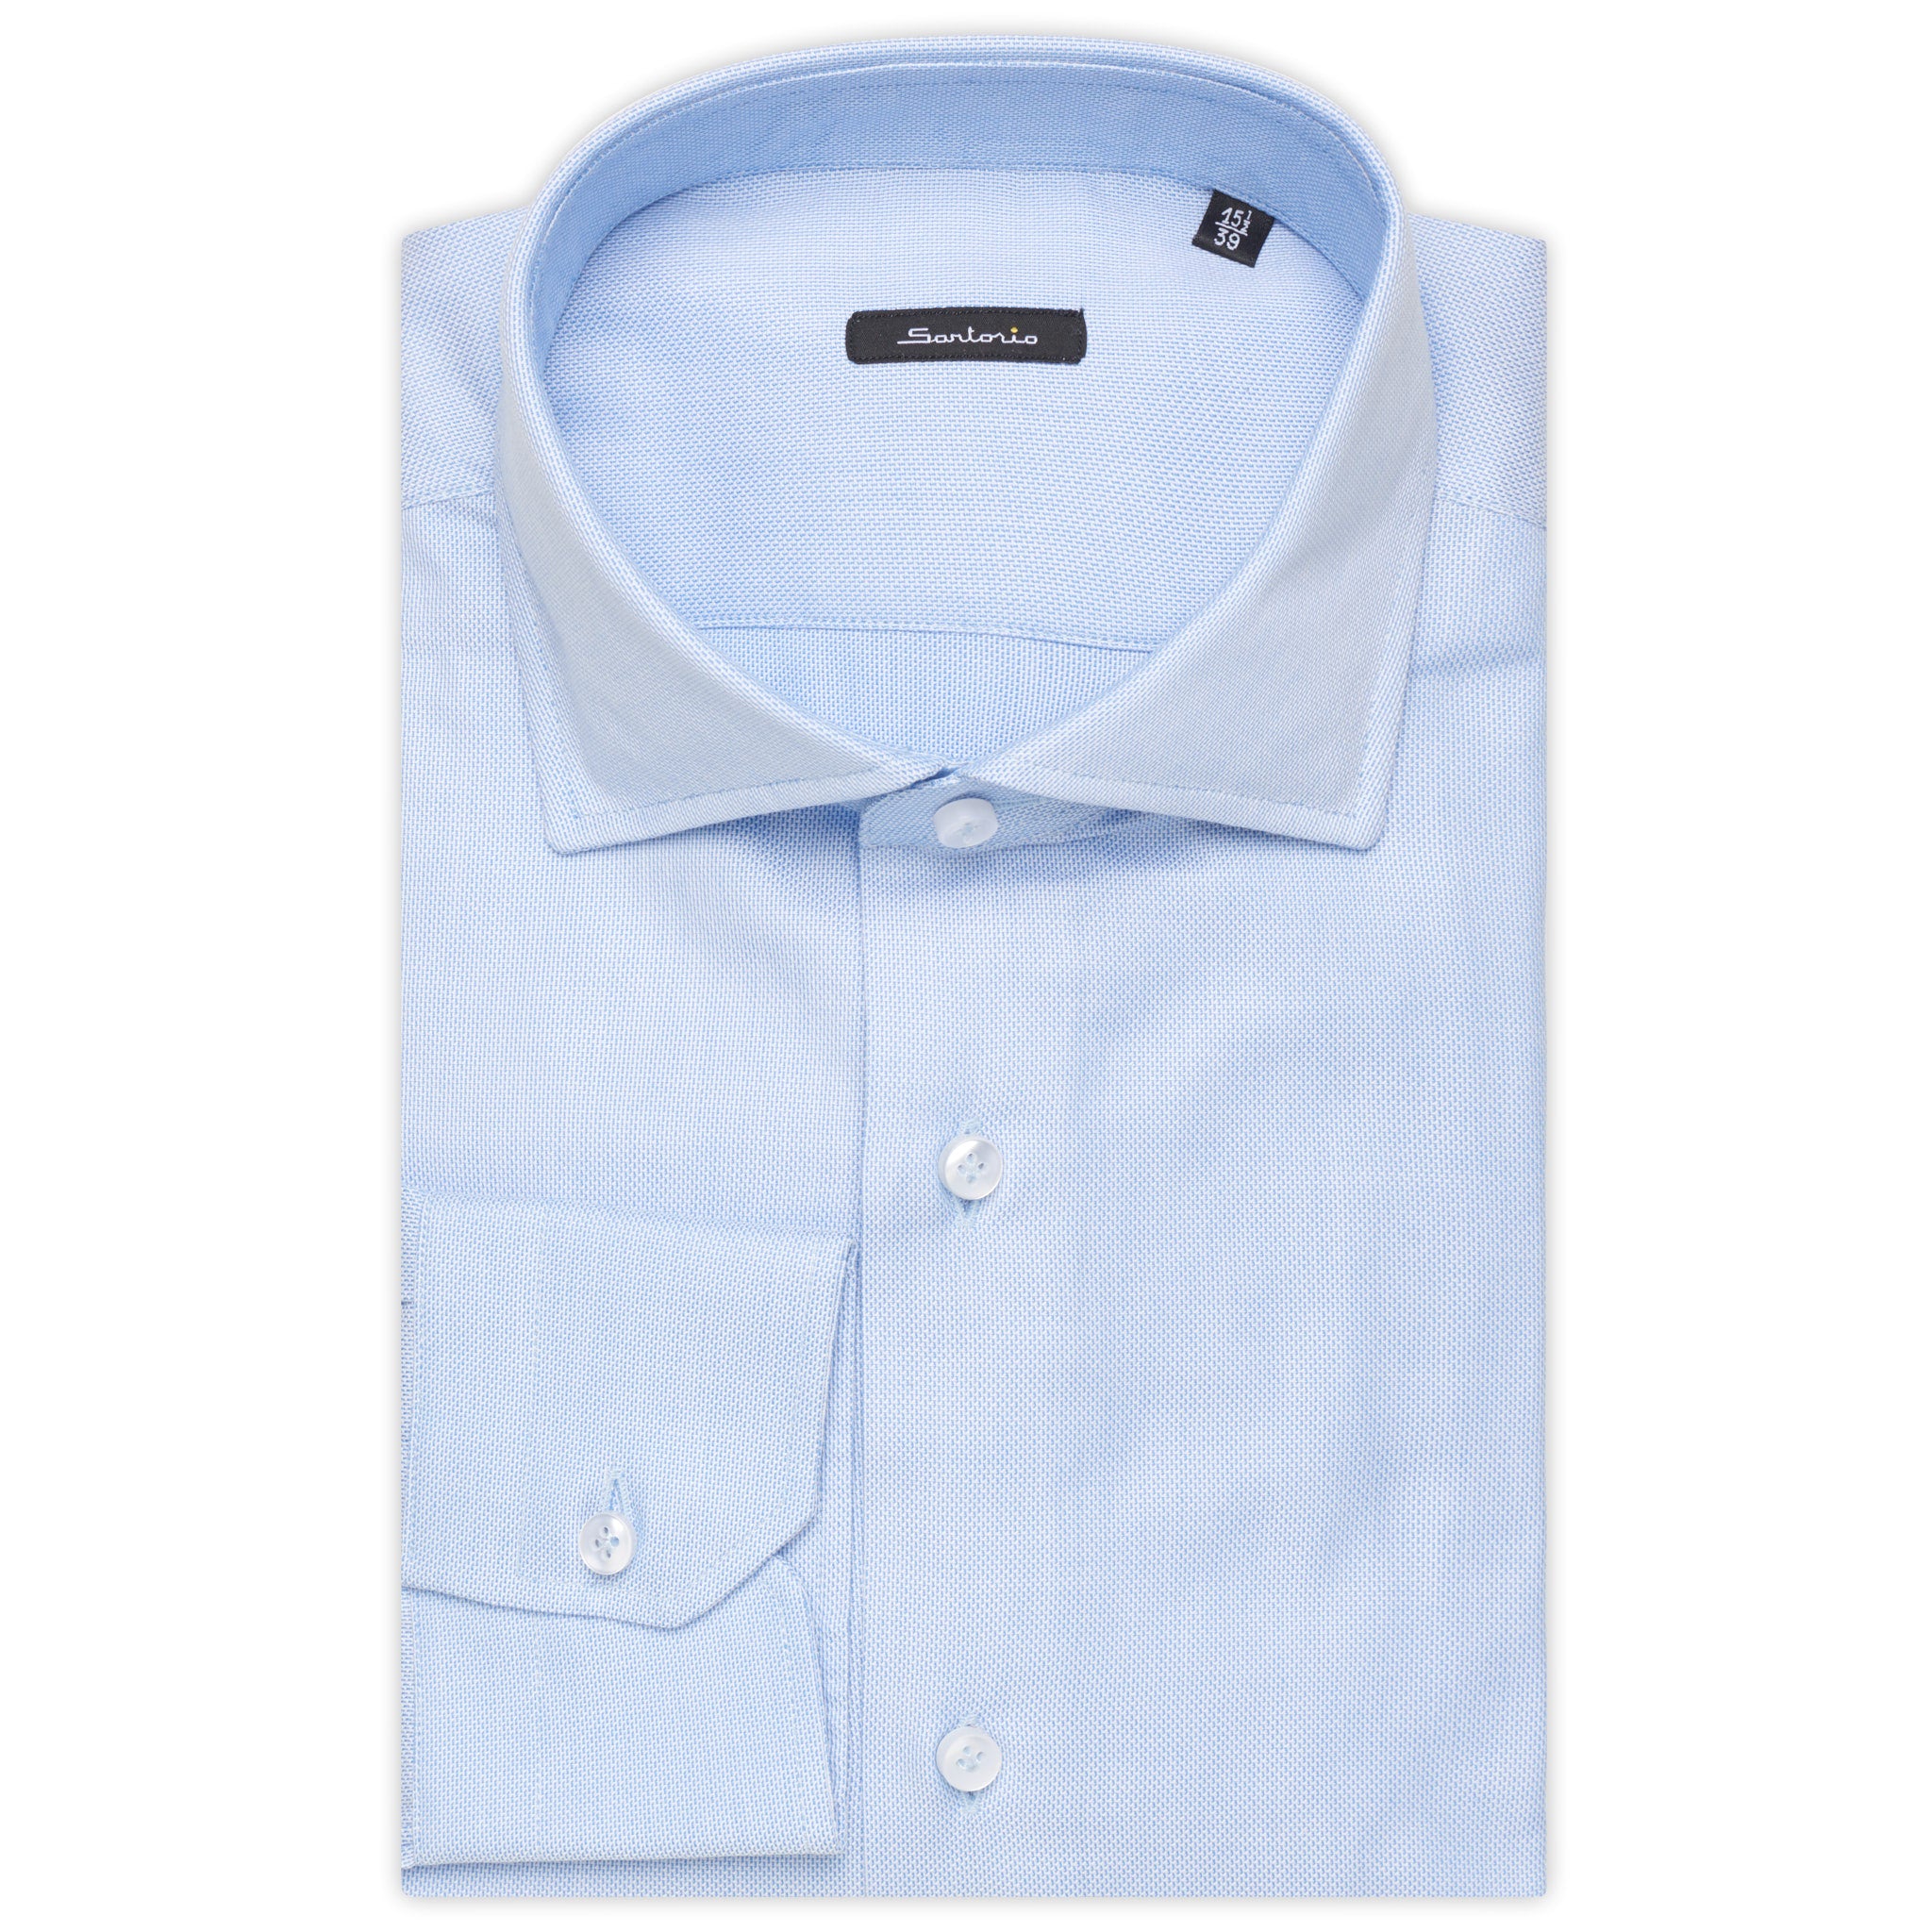 SARTORIO Napoli by KITON Light Blue Cotton Dress Shirt NEW Slim Fit